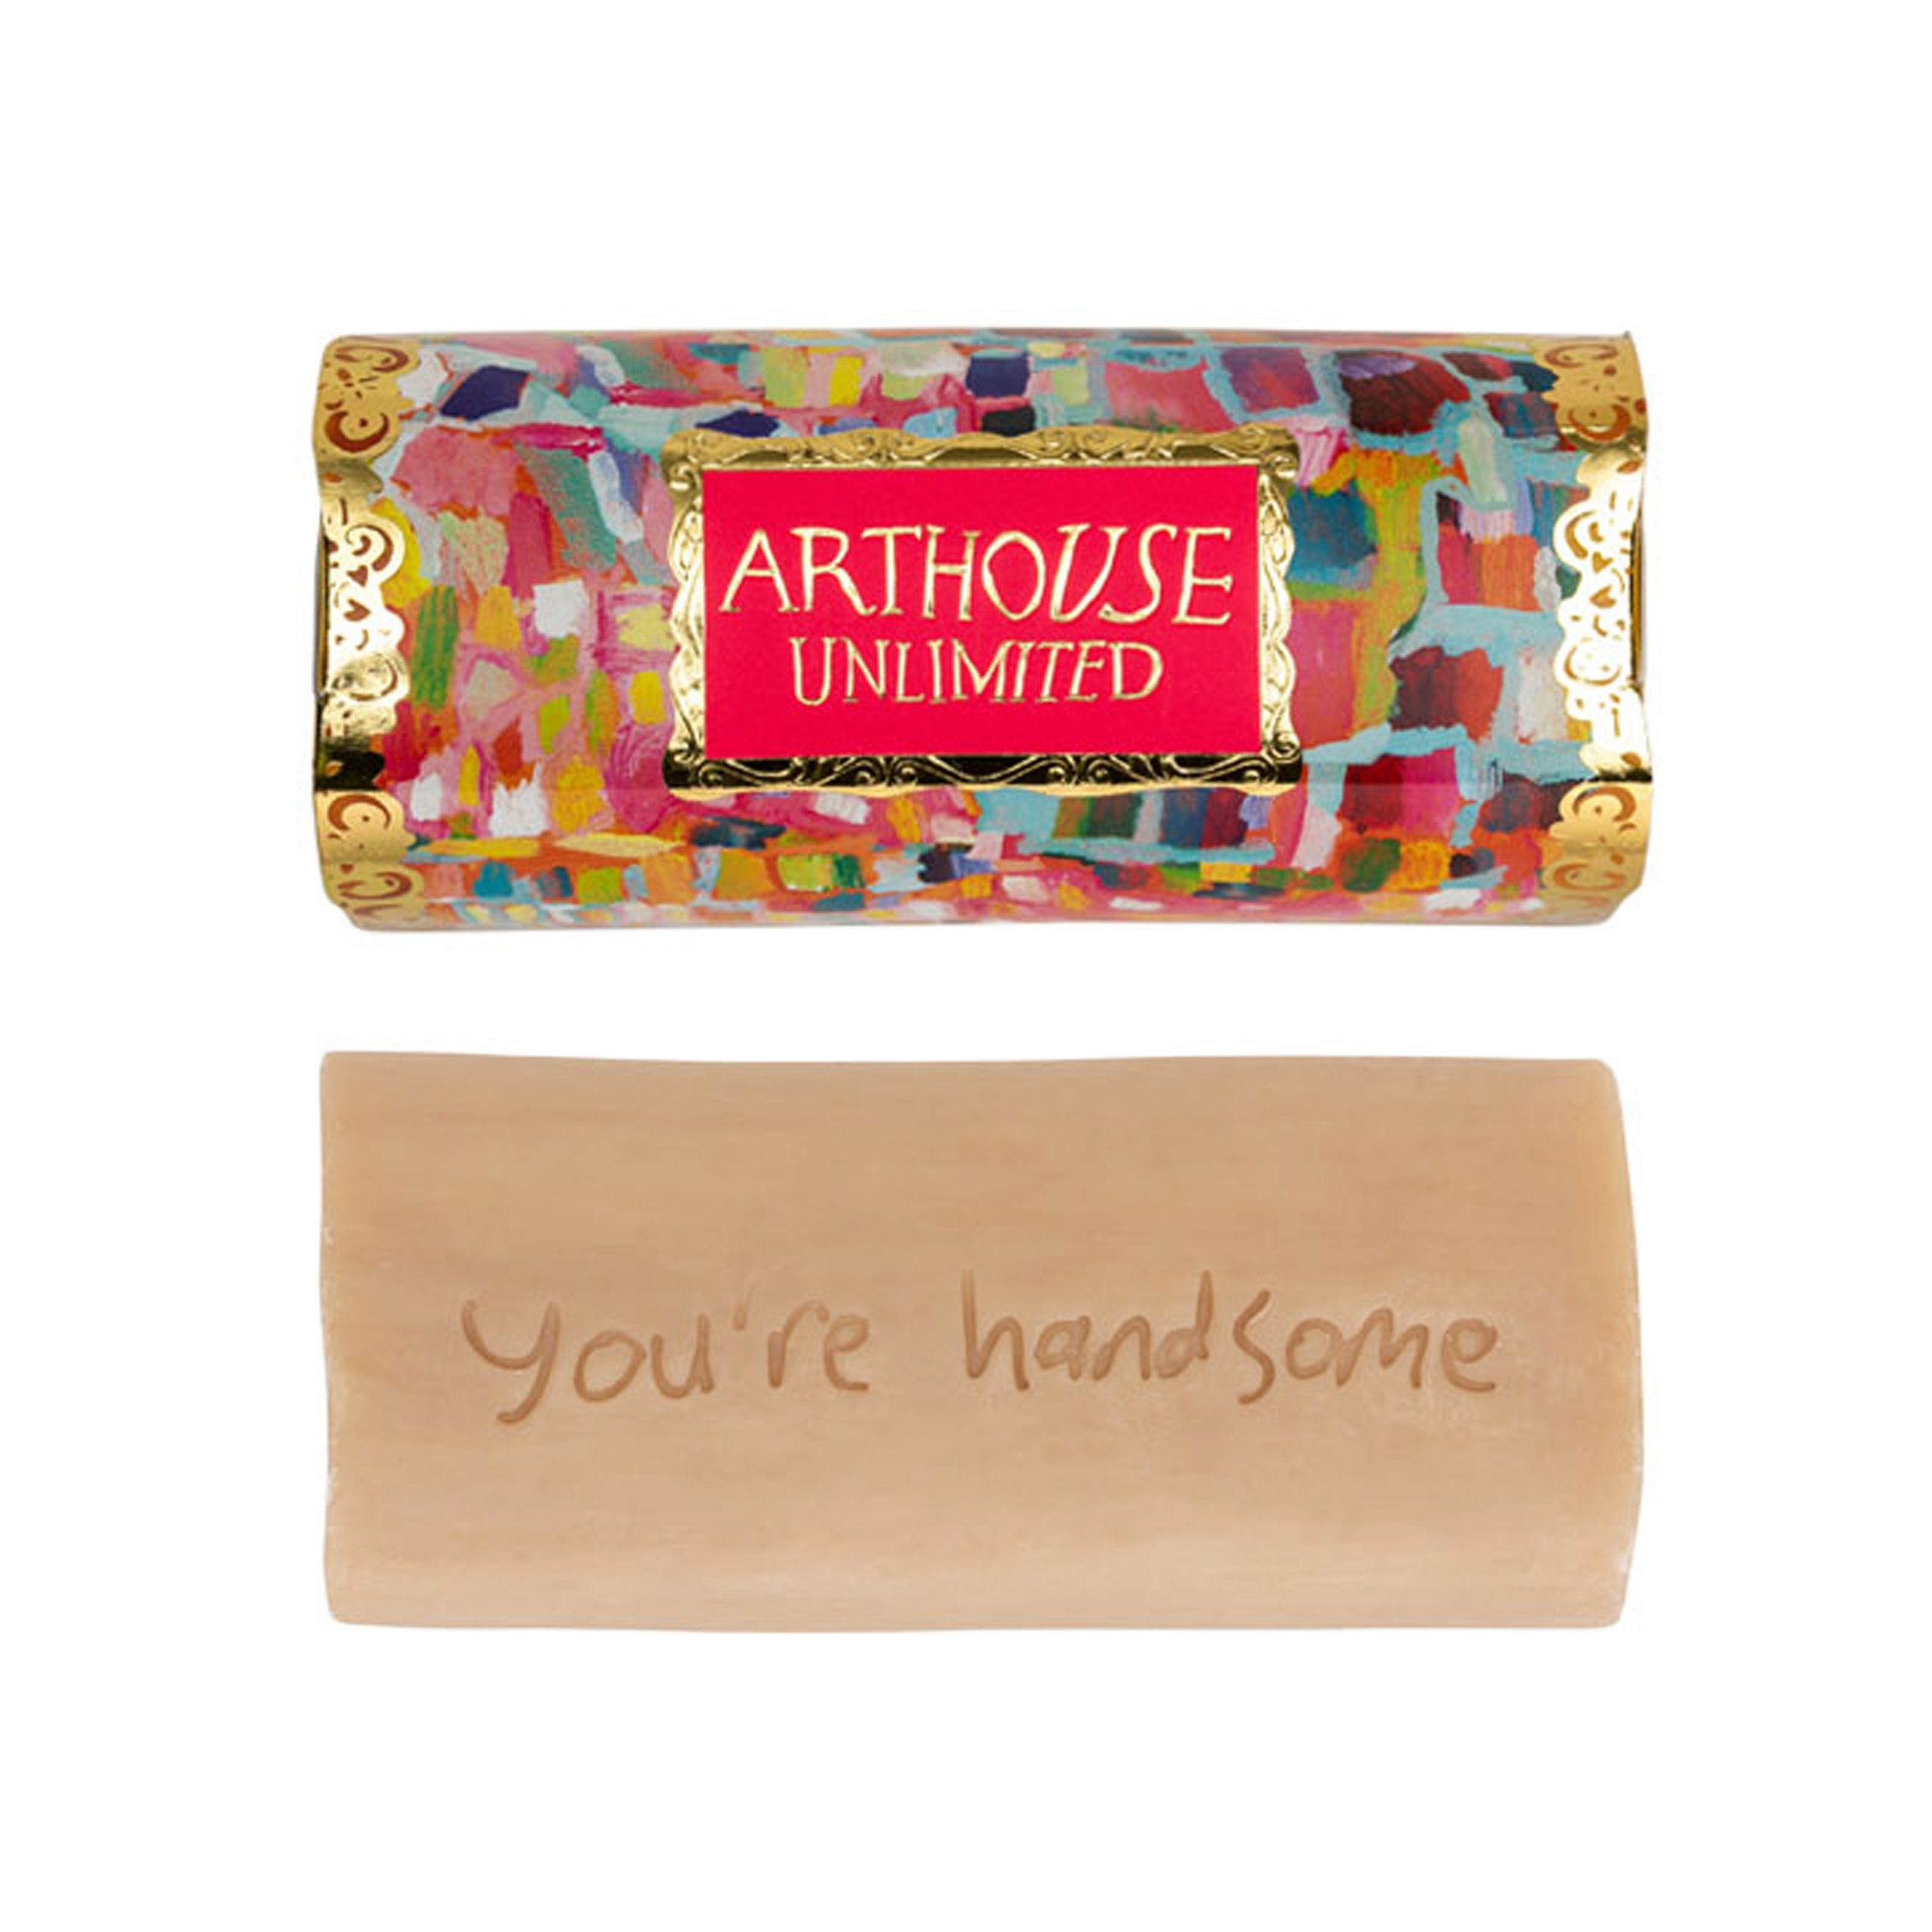 ARTHOUSE Unlimited 150g Genie Organic Soap